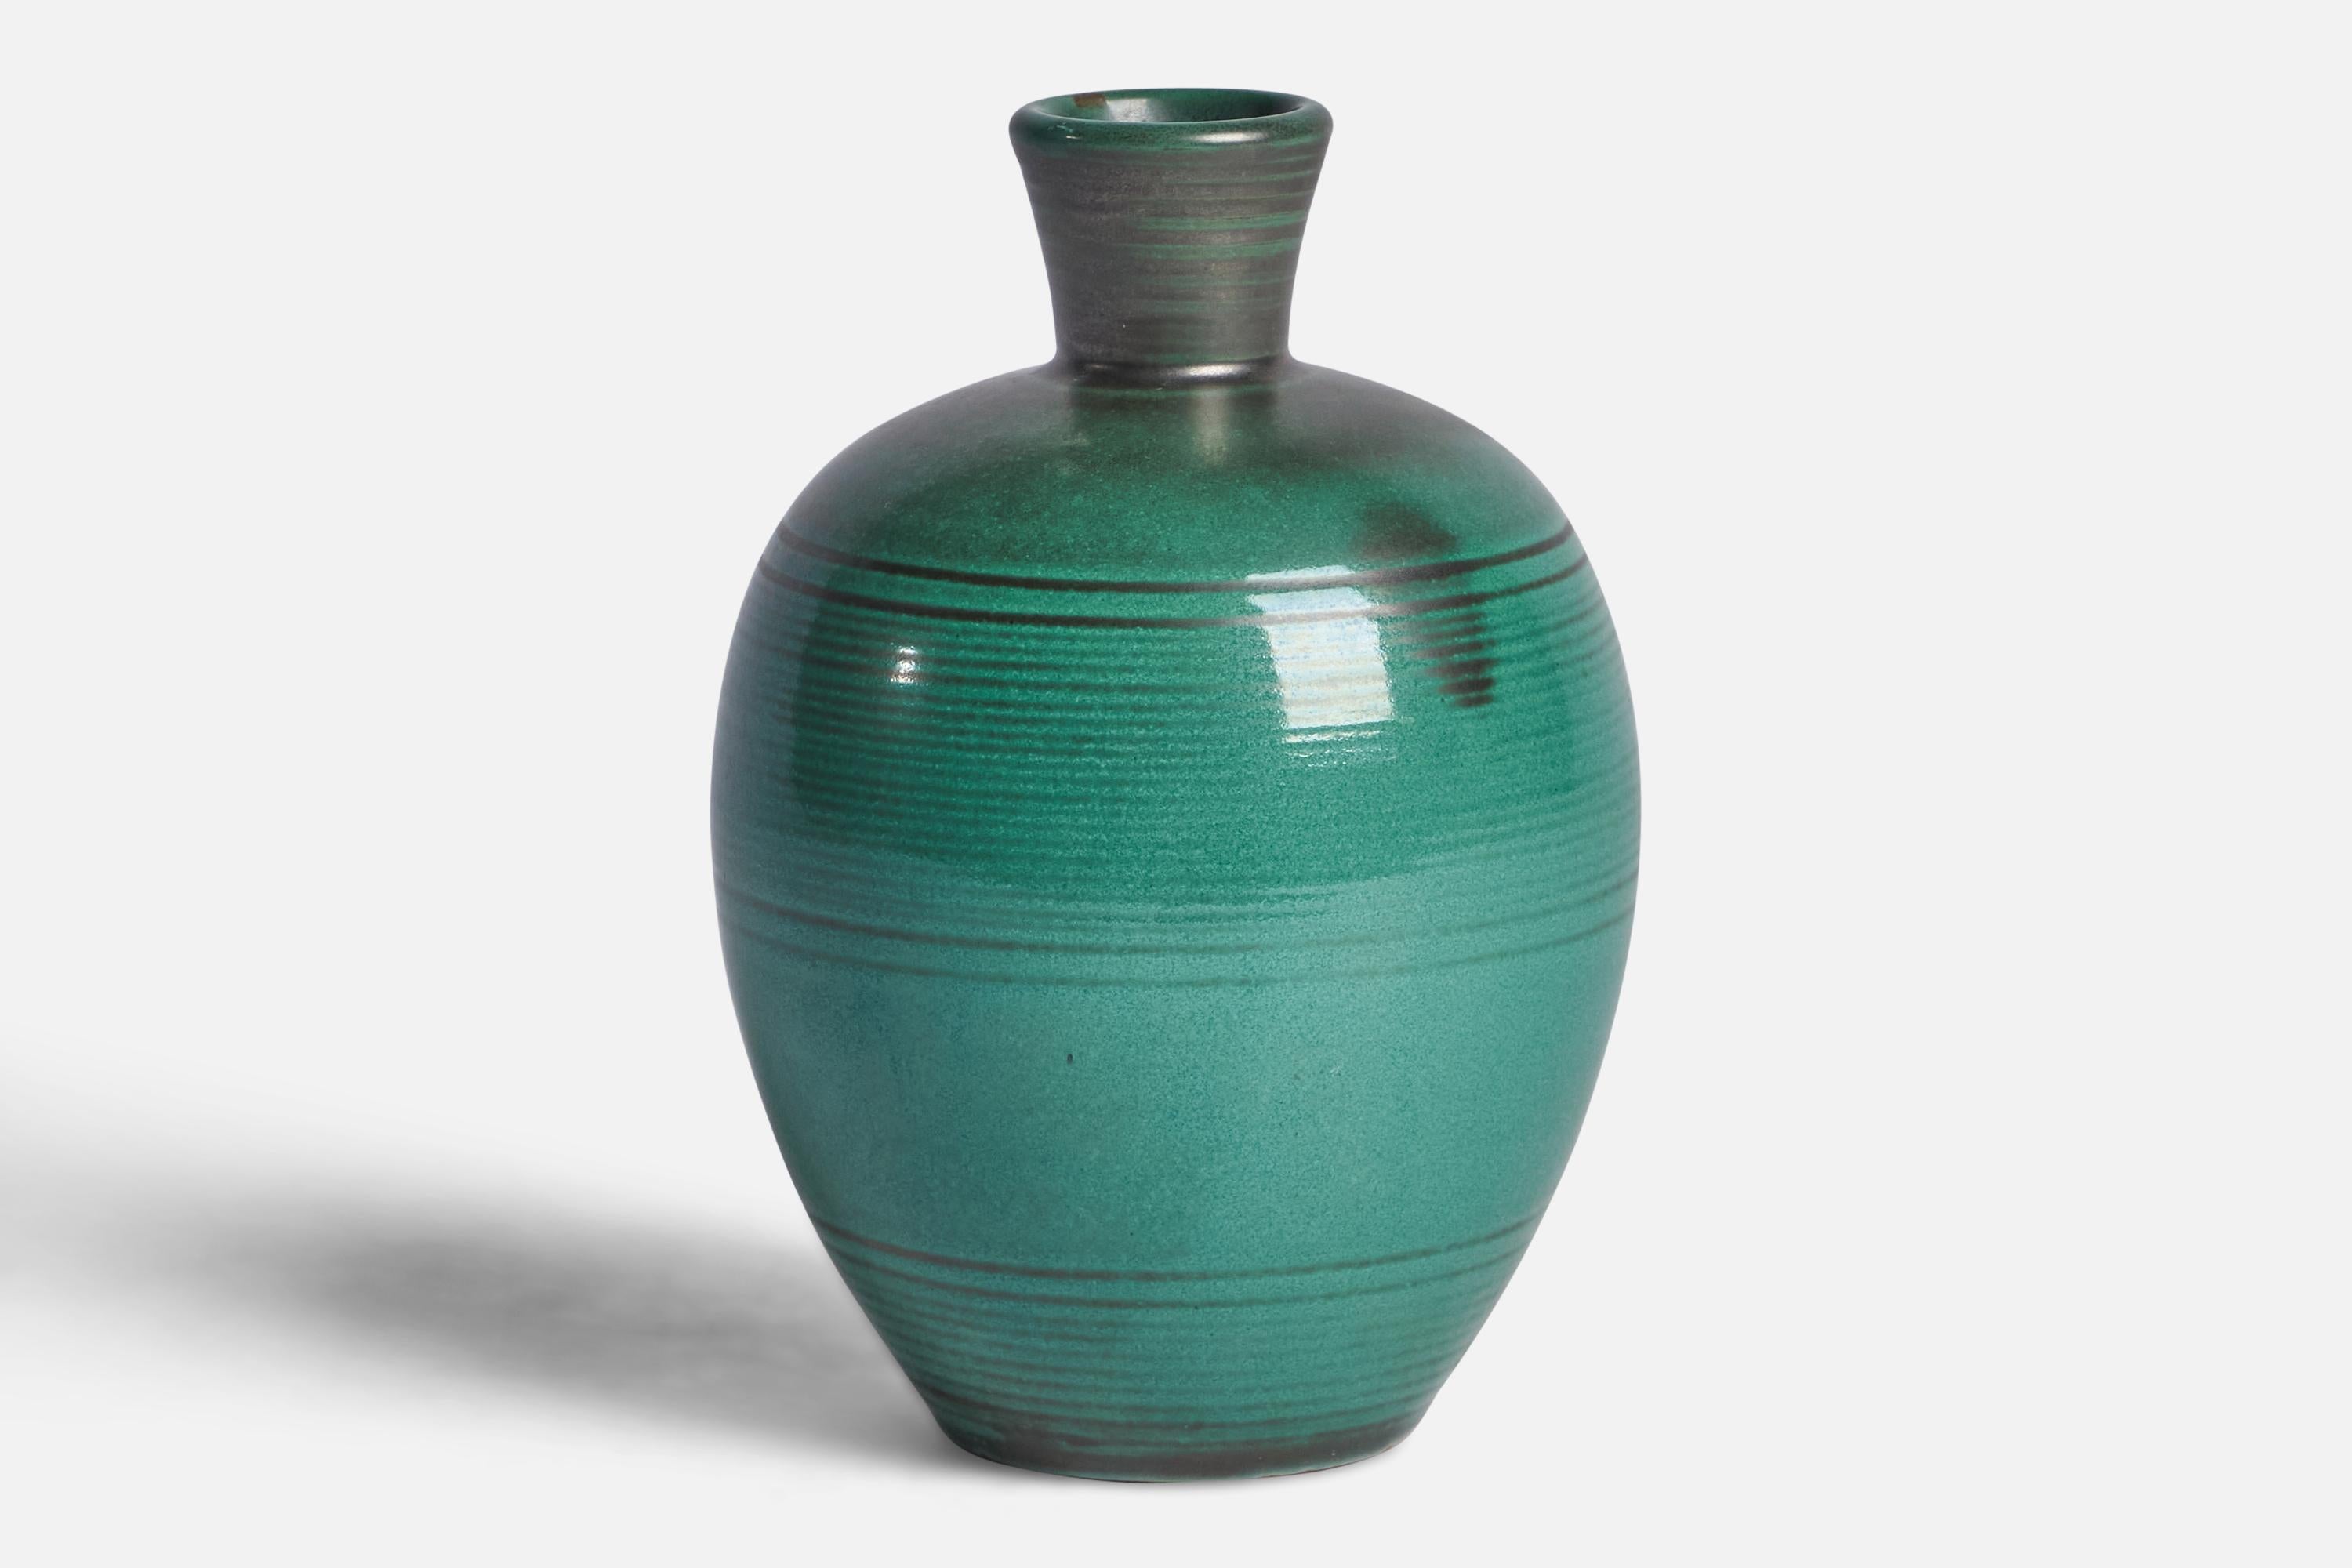 A blue and grey-glazed earthenware vase designed and produced by Upsala Ekeby, Sweden, 1930s.